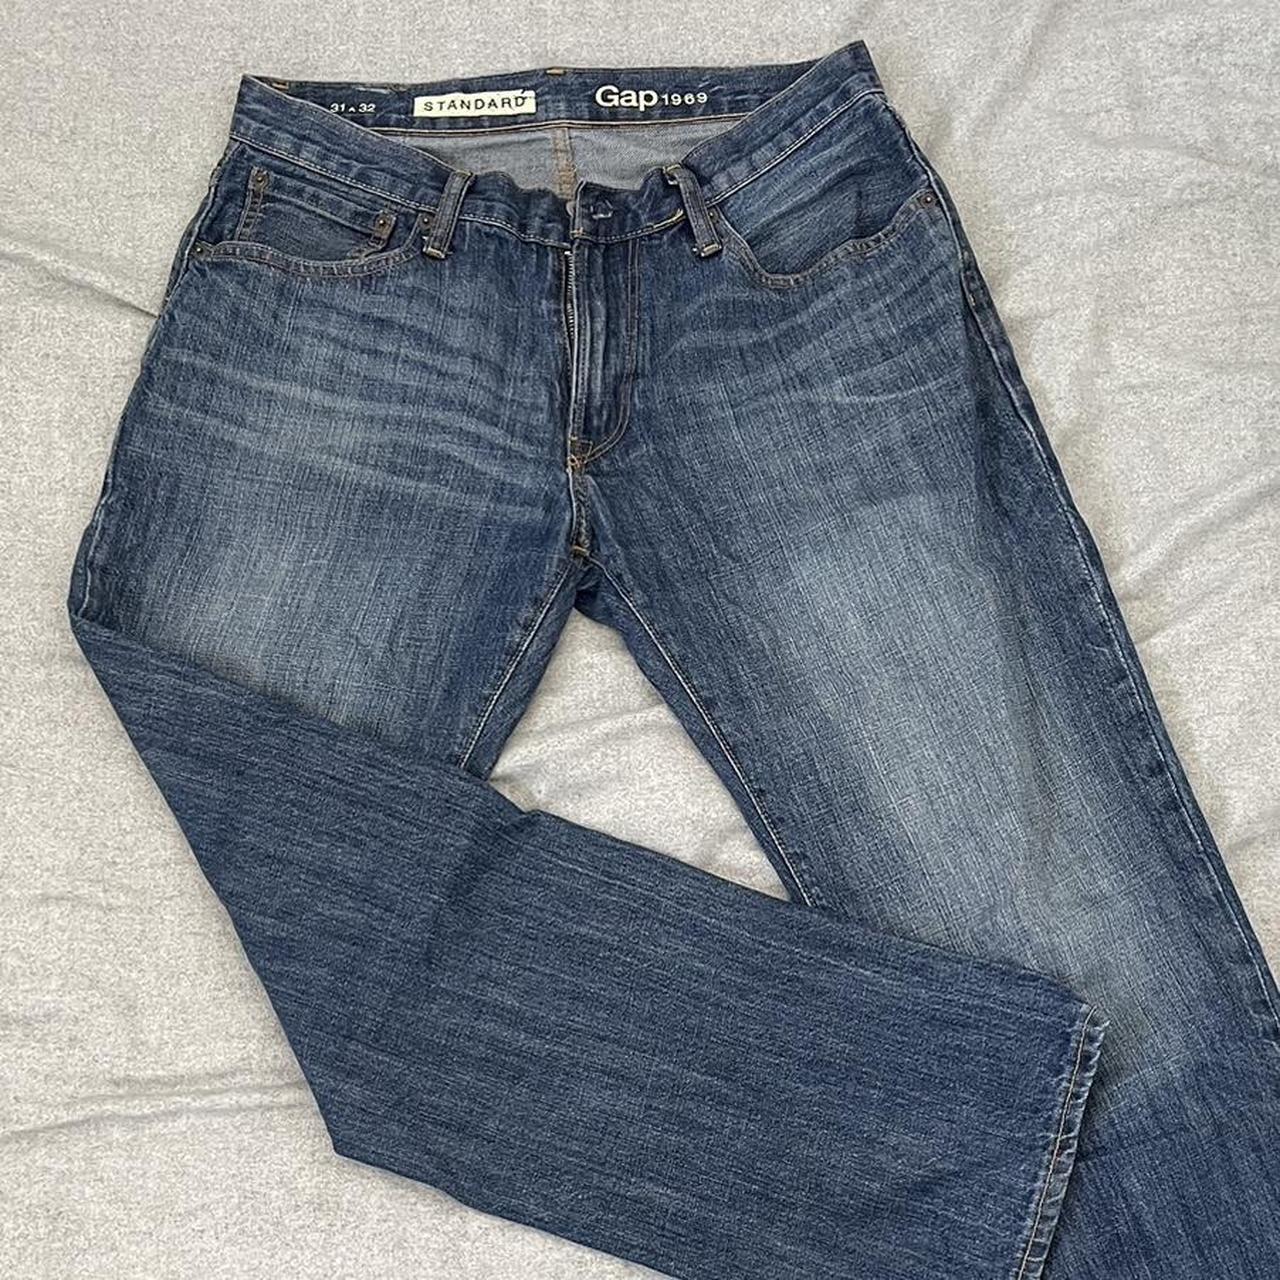 Gap blue denim jeans Size 31x32 standard - Depop